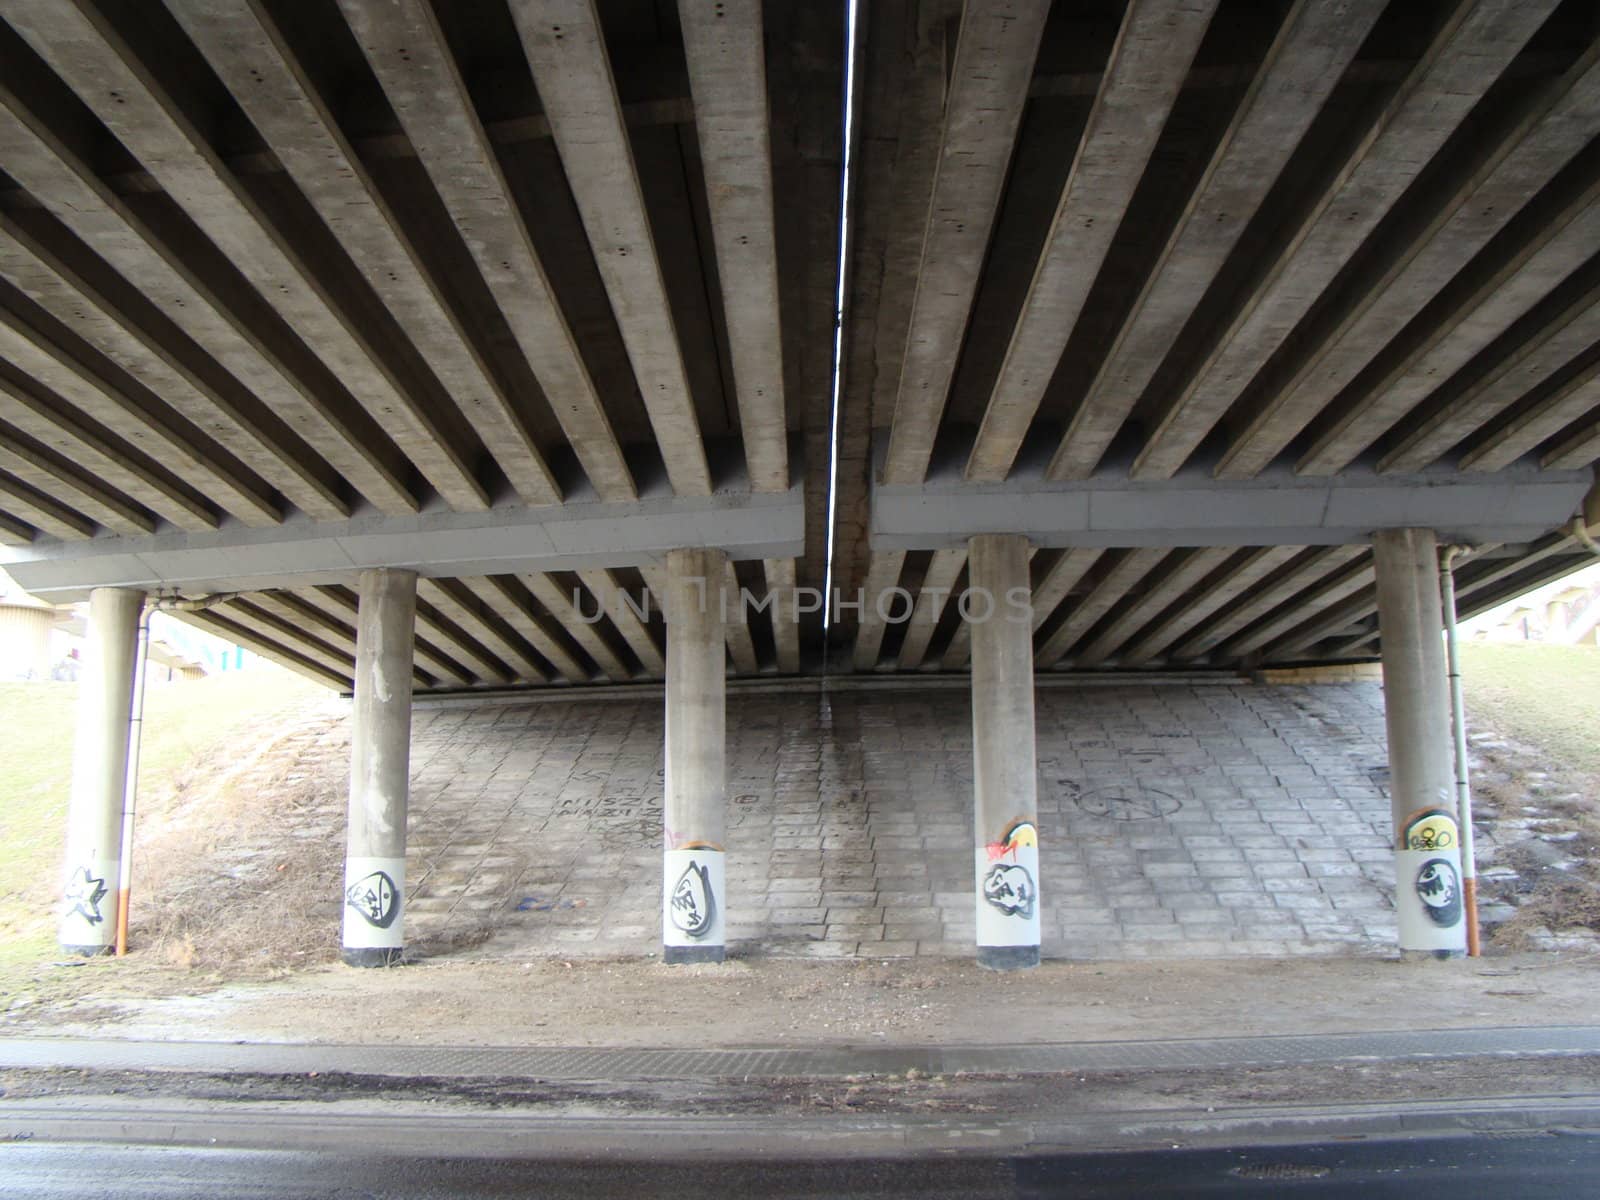 Under the bridge by asbm